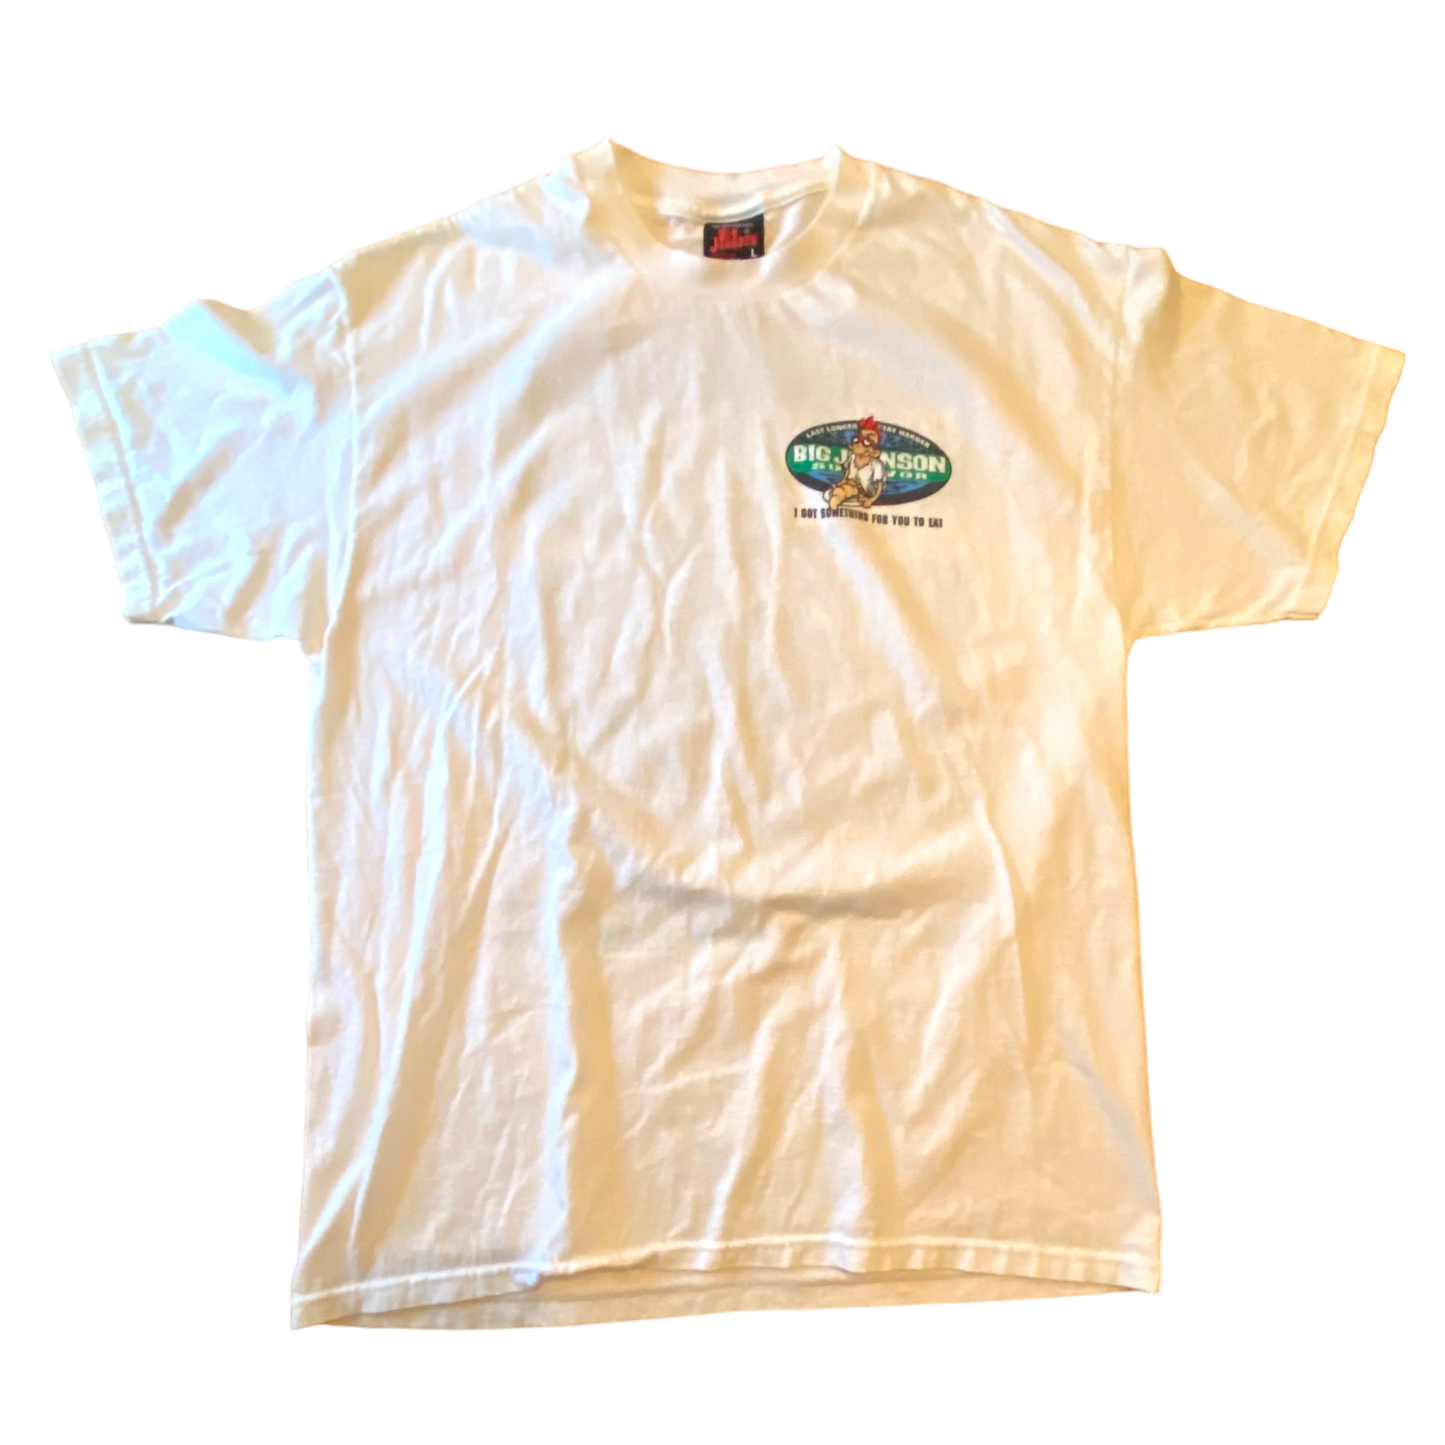 Big Johnson - Vintage 2000 Humor Survivor Graphic White T-Shirt